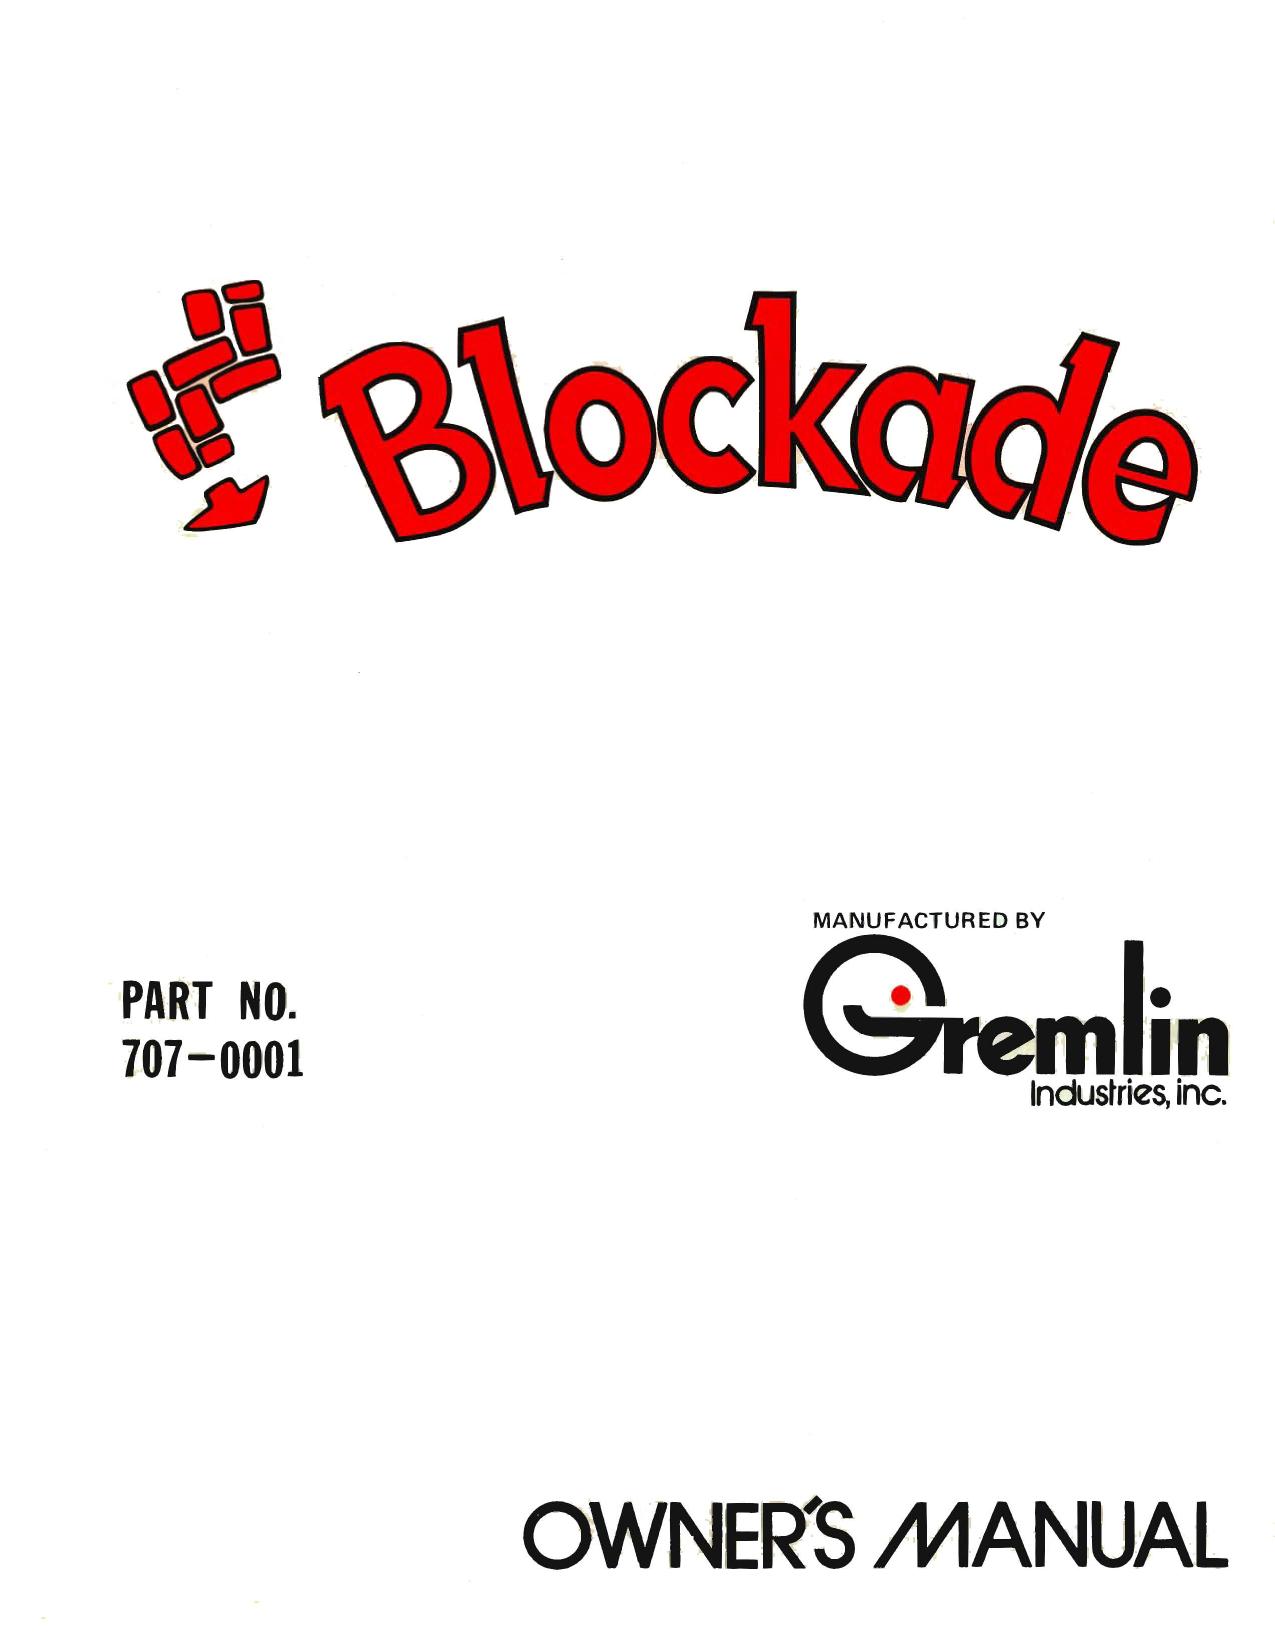 Blockade Owners Manual